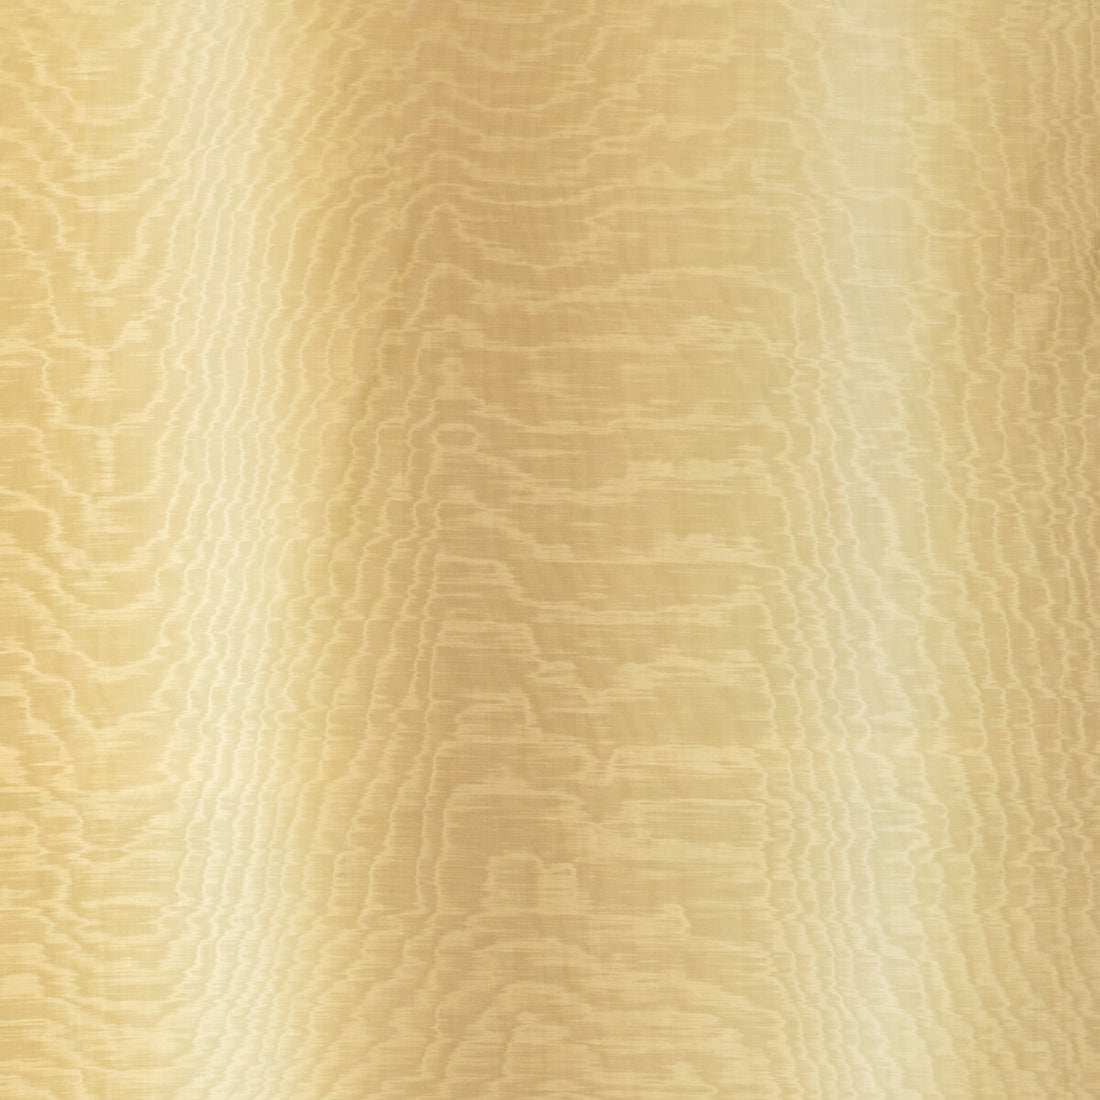 Horizonte fabric in citron color - pattern 2020214.4.0 - by Lee Jofa in the Oscar De La Renta IV collection